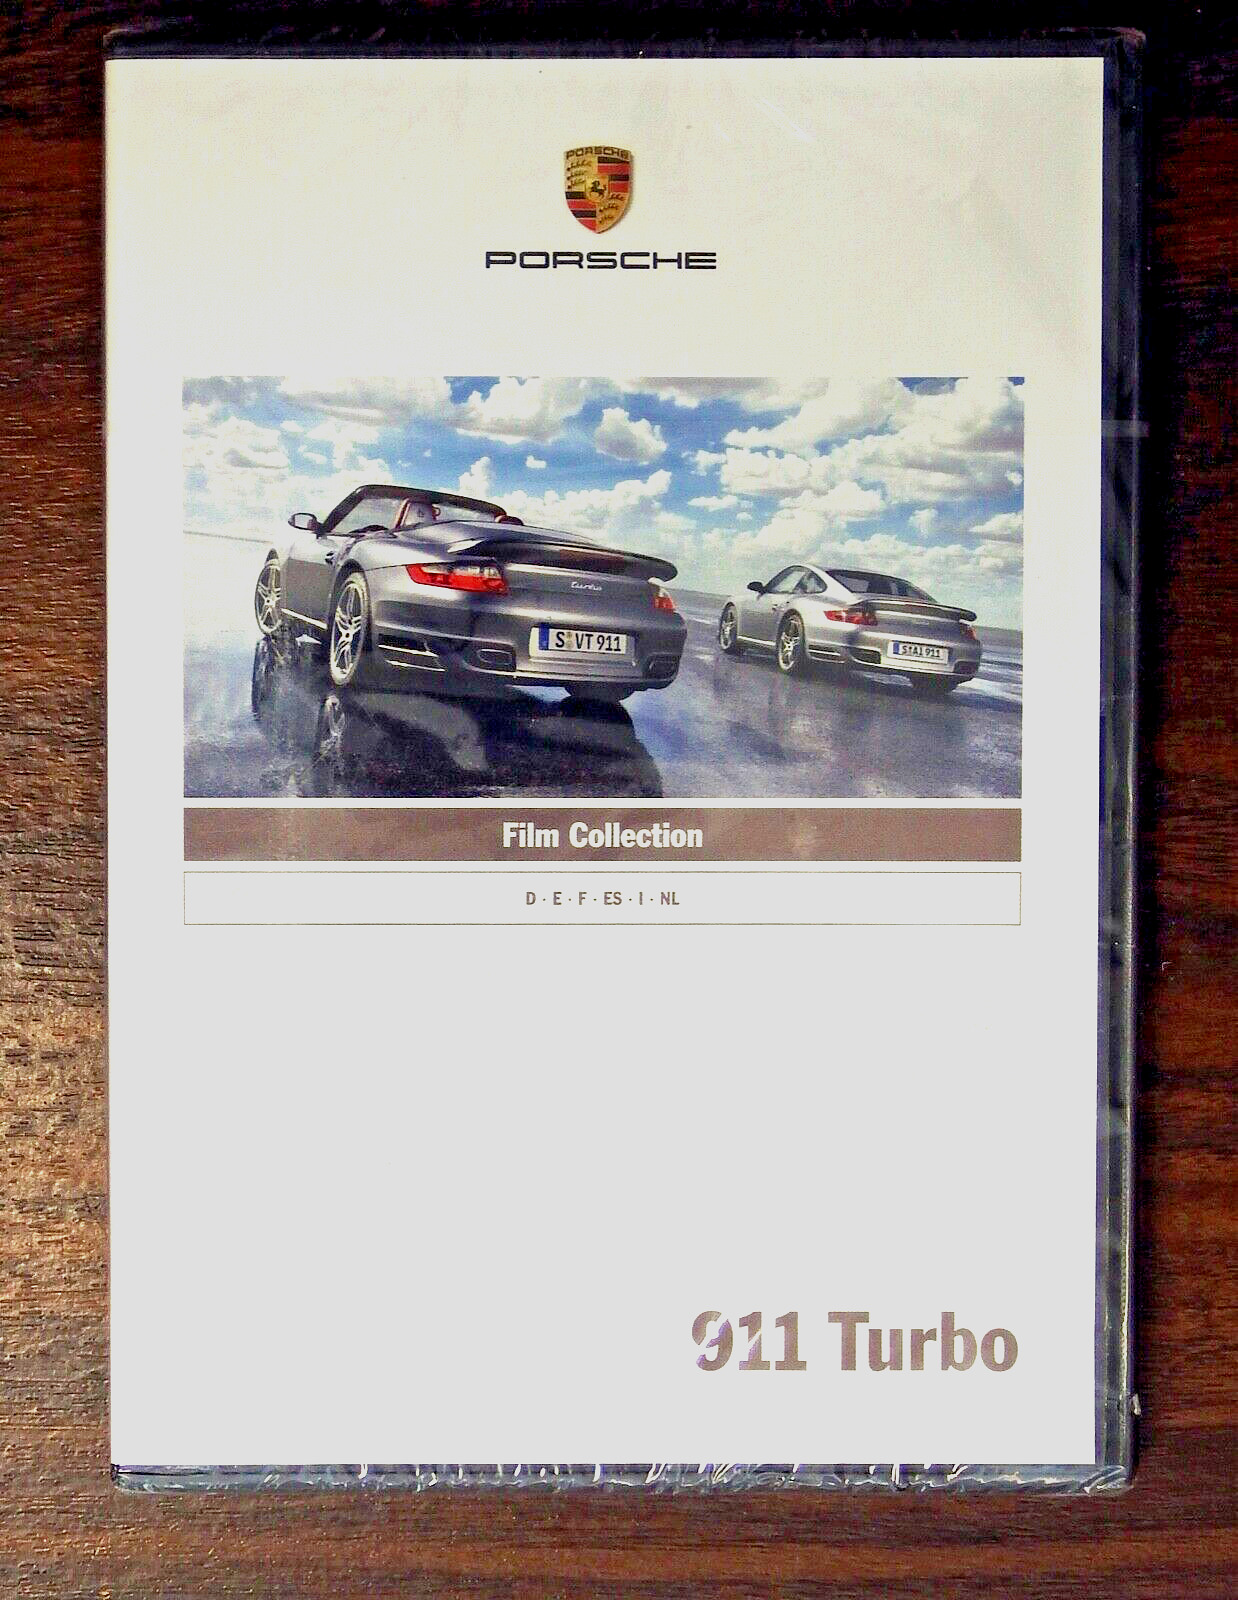 Original 2007 Porsche 911 Turbo Film Collection DVD. New. Sealed.